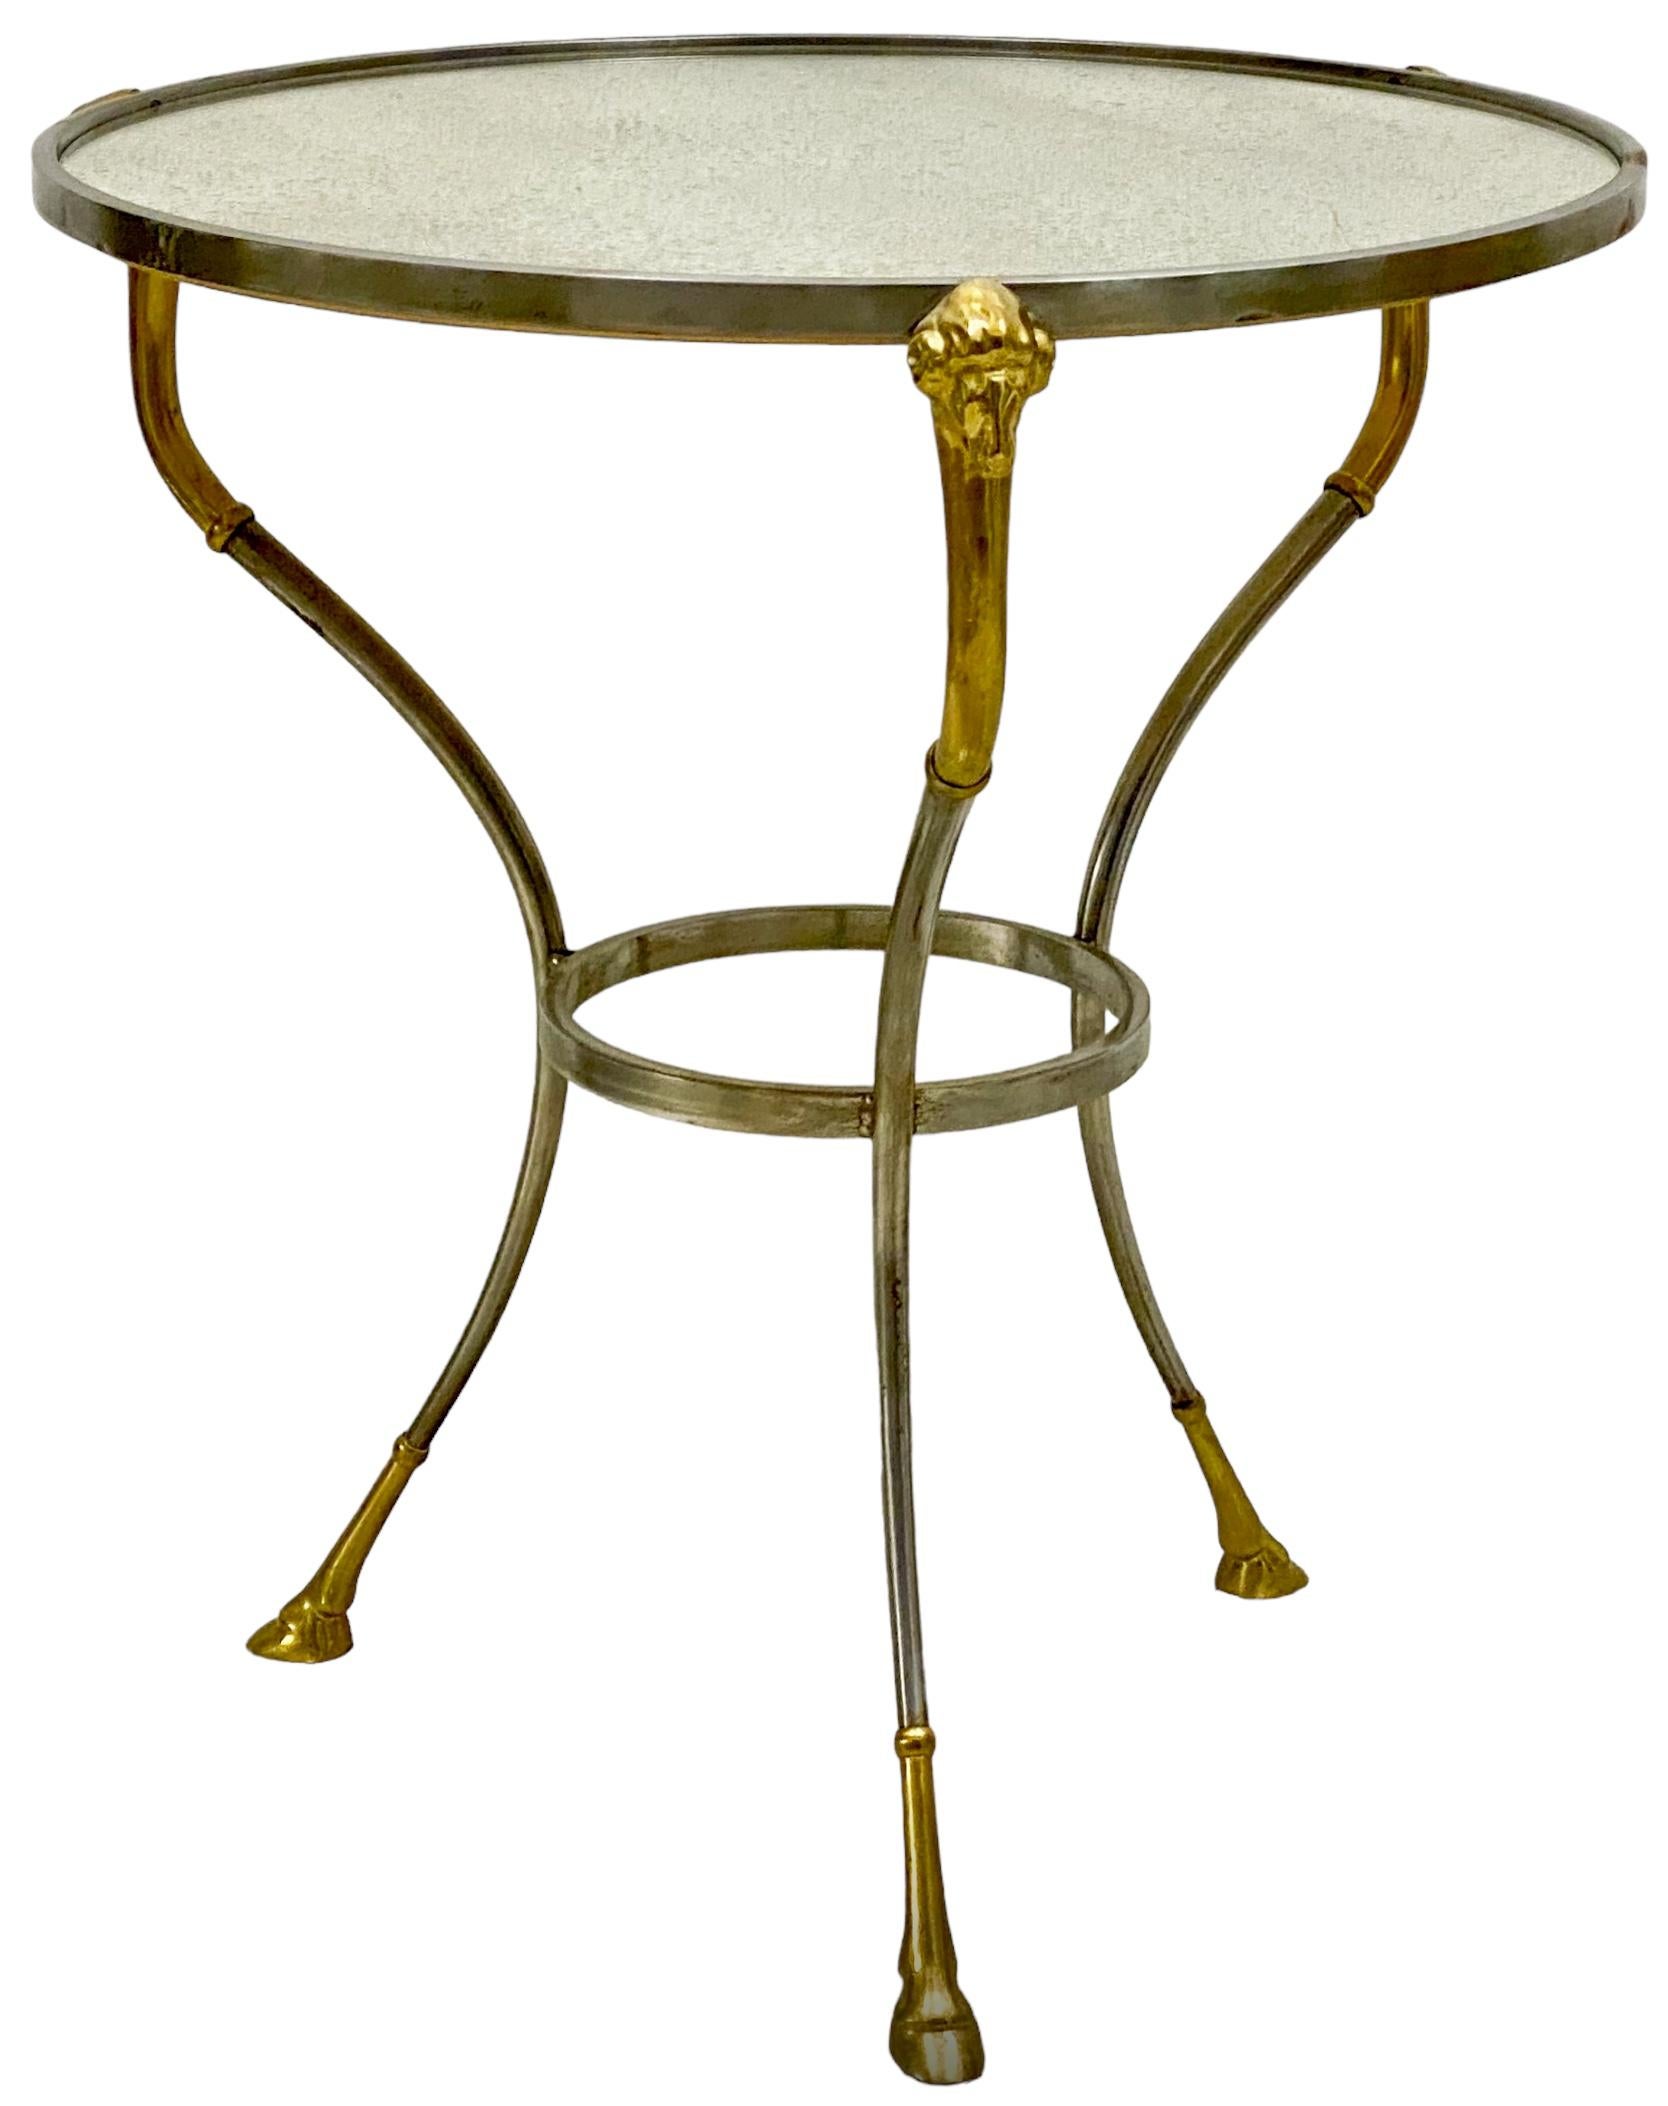 Italian Maison Jansen Inspired Steel & Brass Mirrored Gueridon / Side Table  For Sale 1